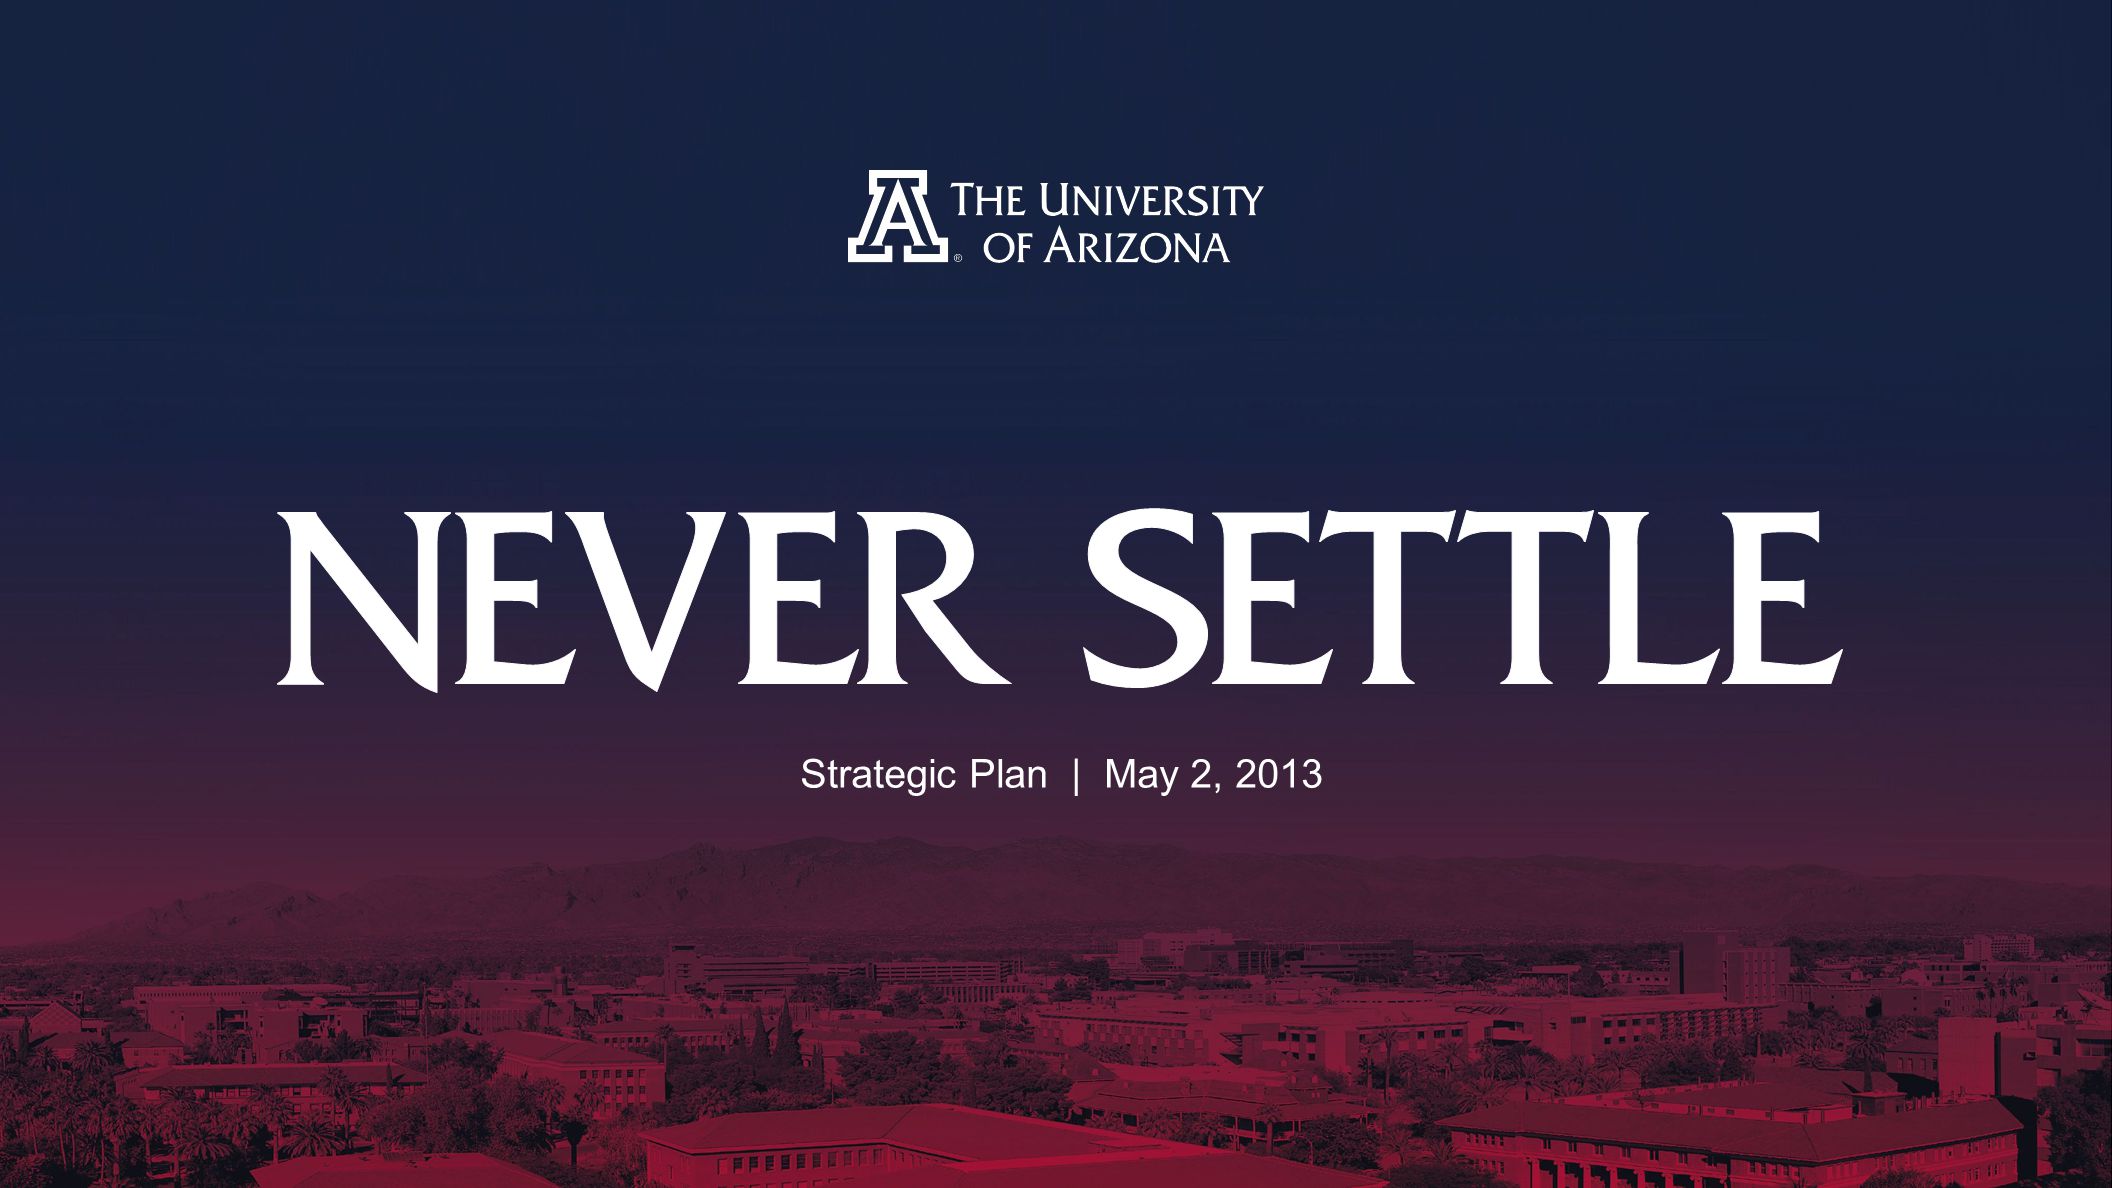 Strategic Plan | May 2, 2013